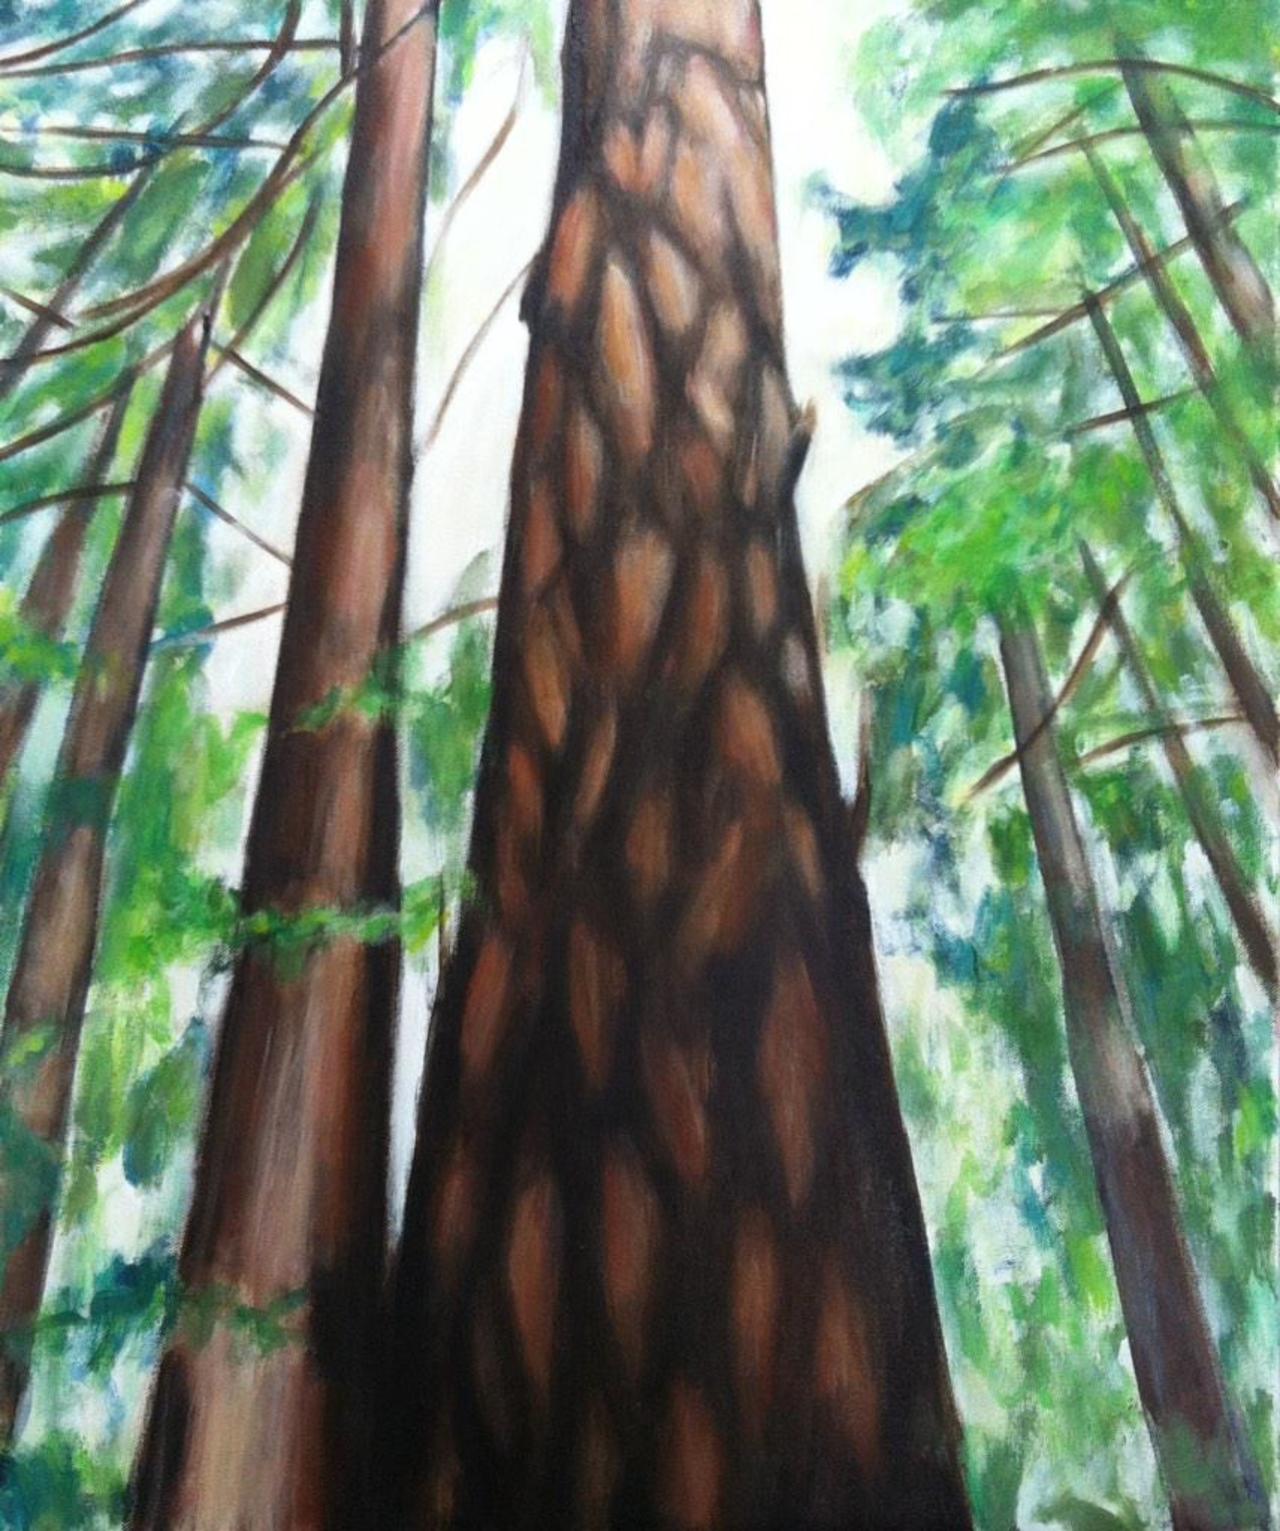 #Redwood #Forest by #janelhouton #allart #painting #Gallery #marin #california #Boston #museum #contemporaryart #art http://t.co/htKovvFmRX